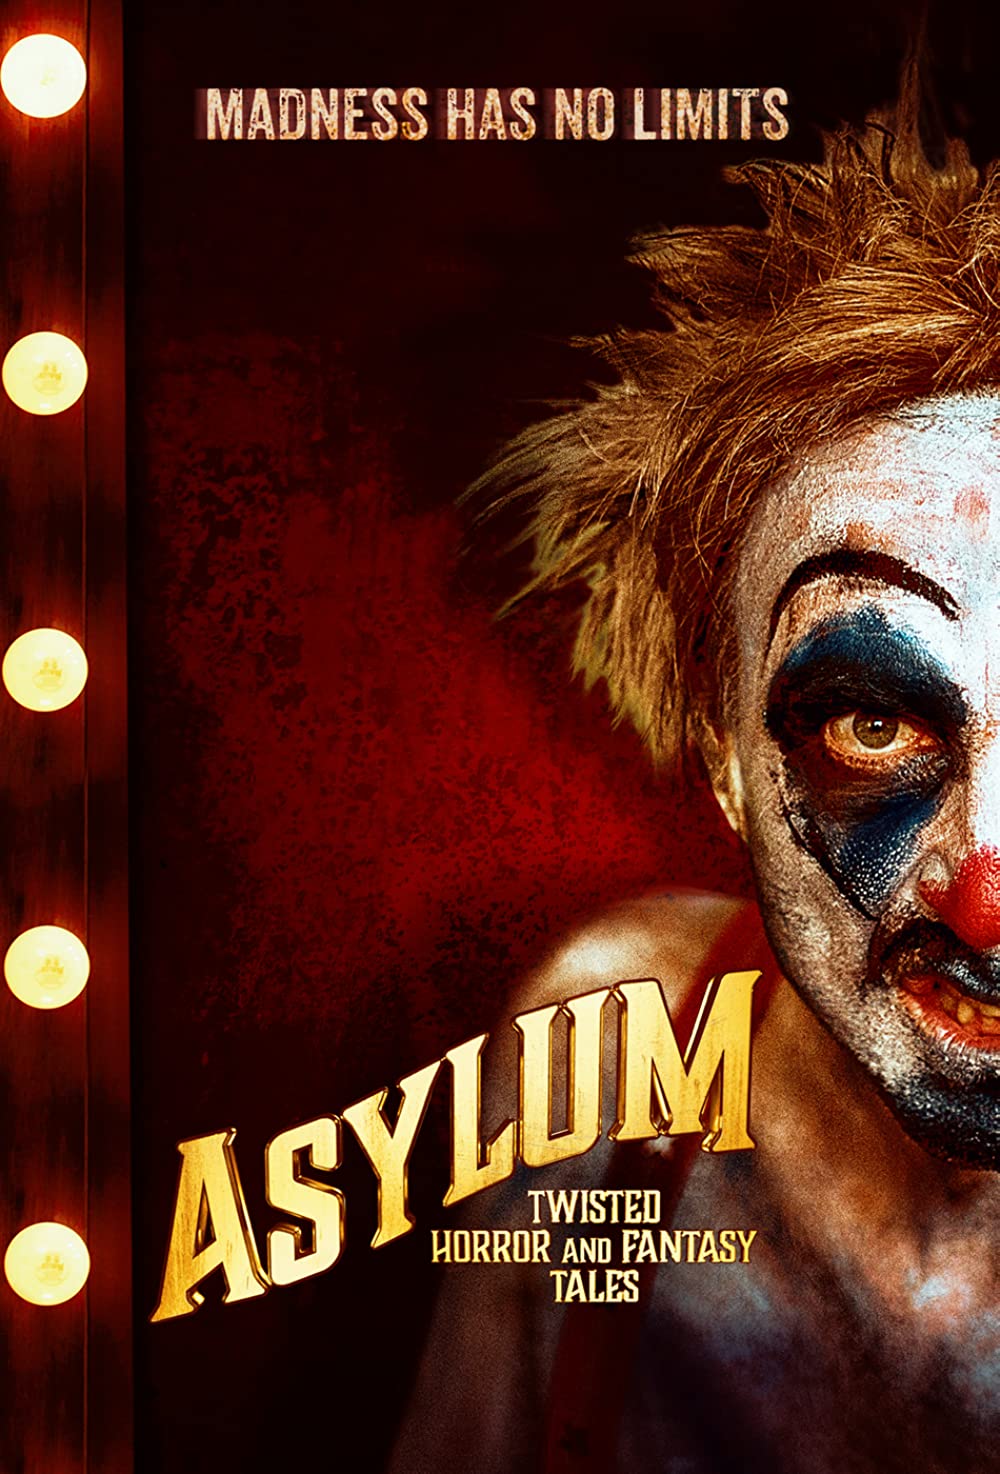 Download Asylum Twisted Horror And Fantasy Tales (2020) Dual Audio Hindi ORG BluRay ESub 1080p [2.3GB] | 720p [1.3GB] | 480p [500MB] download